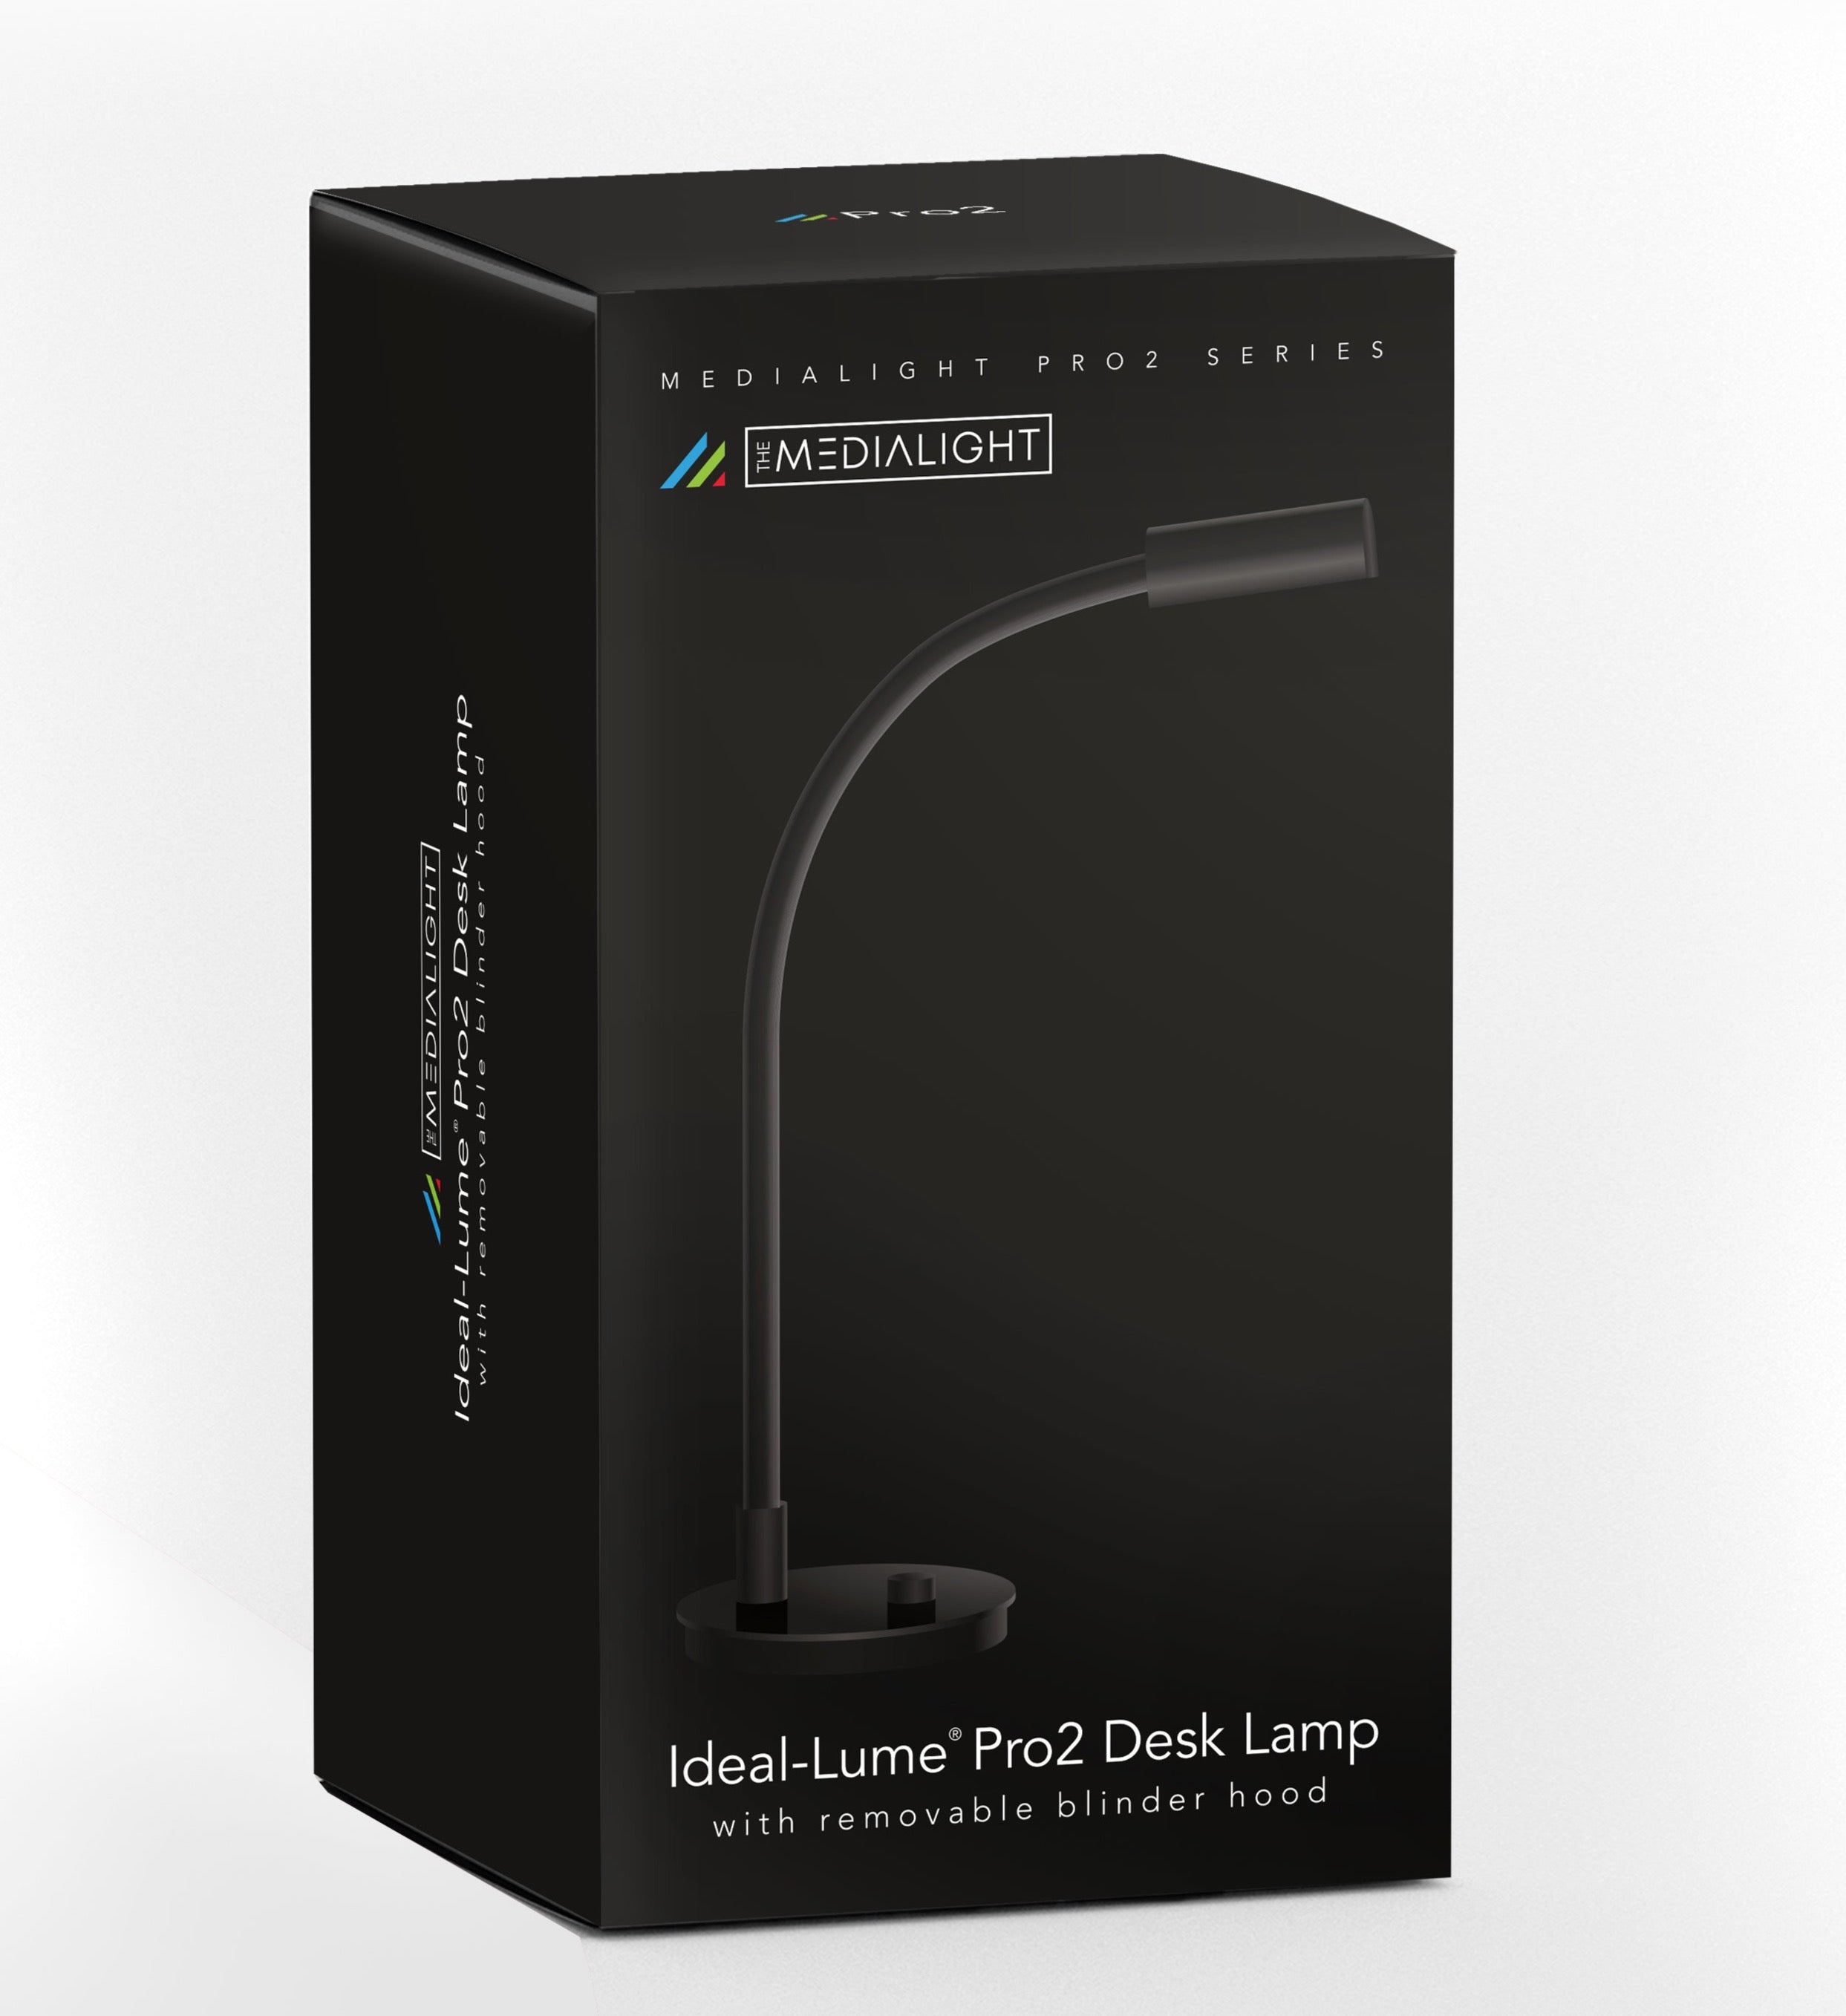 Ideal-Lume Pro（Mk2 芯片）和Pro2 台灯— MediaLight 偏置照明